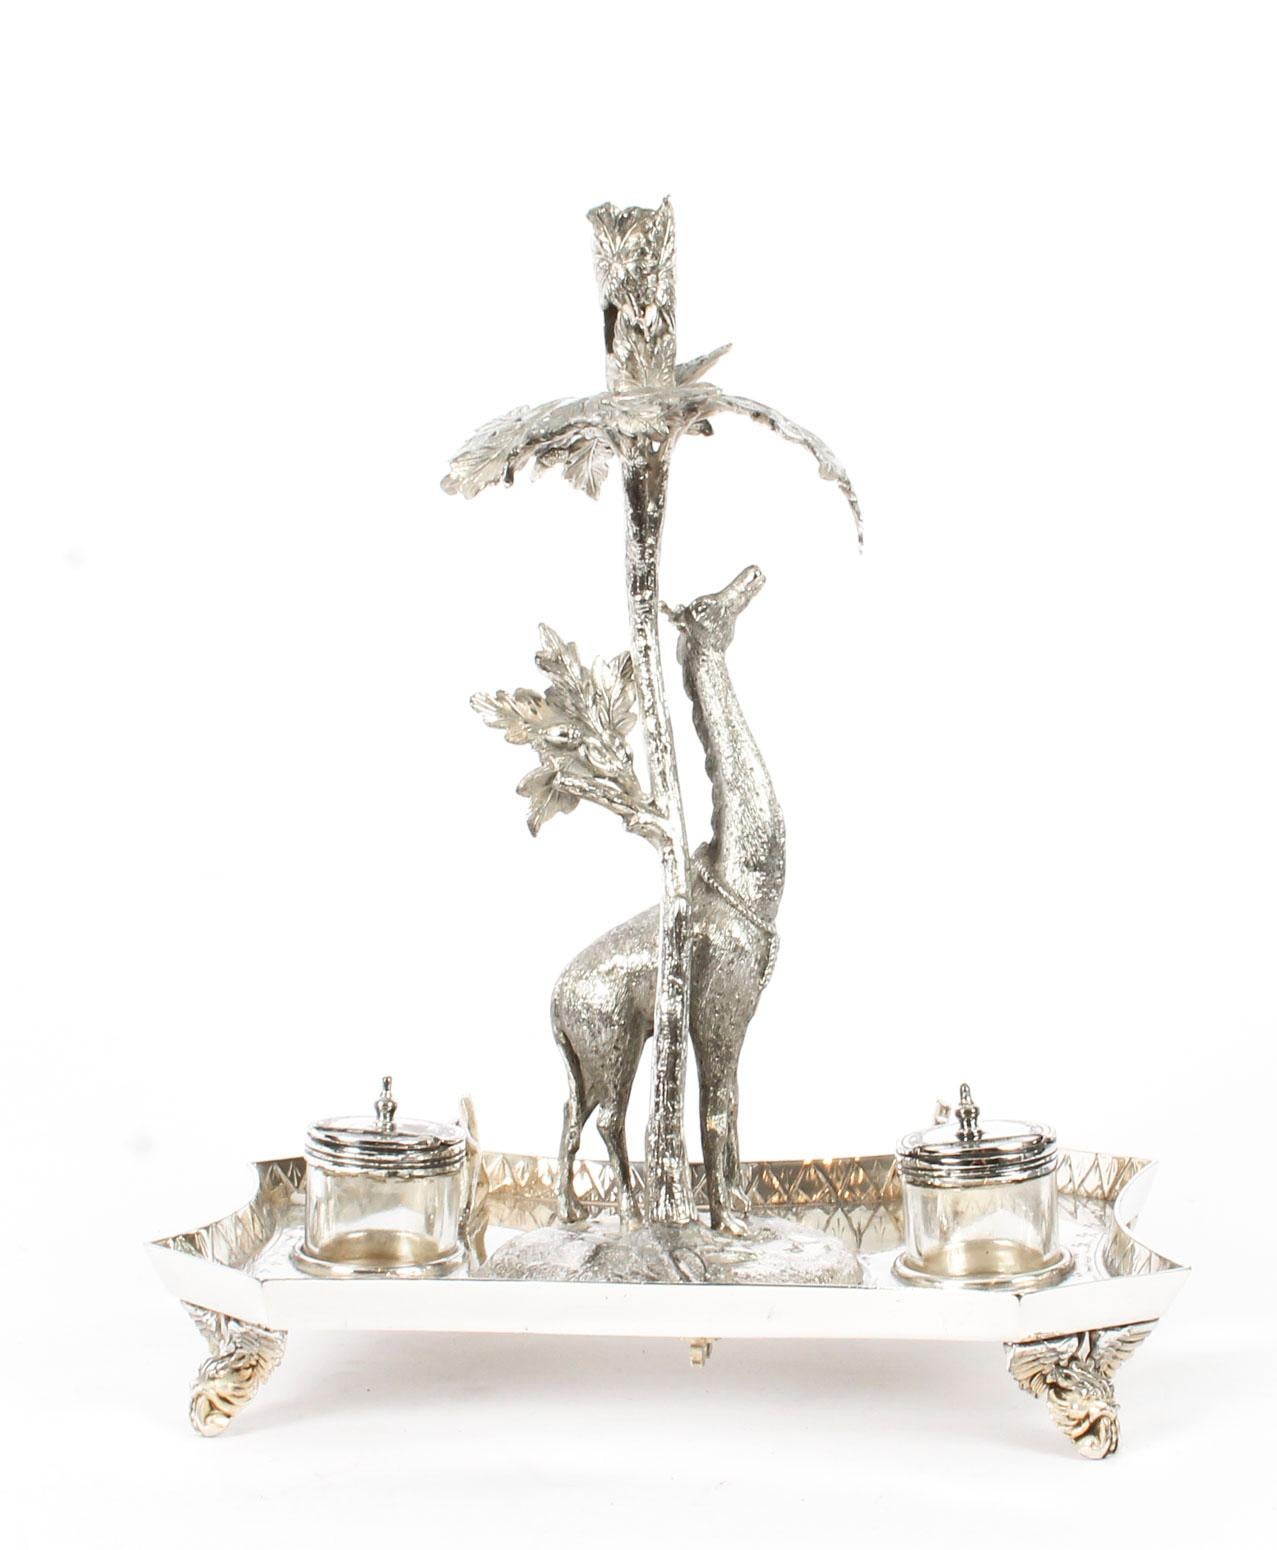 19th Century English Silver Plated Giraffe Desk Set James Deakin & Sons 2